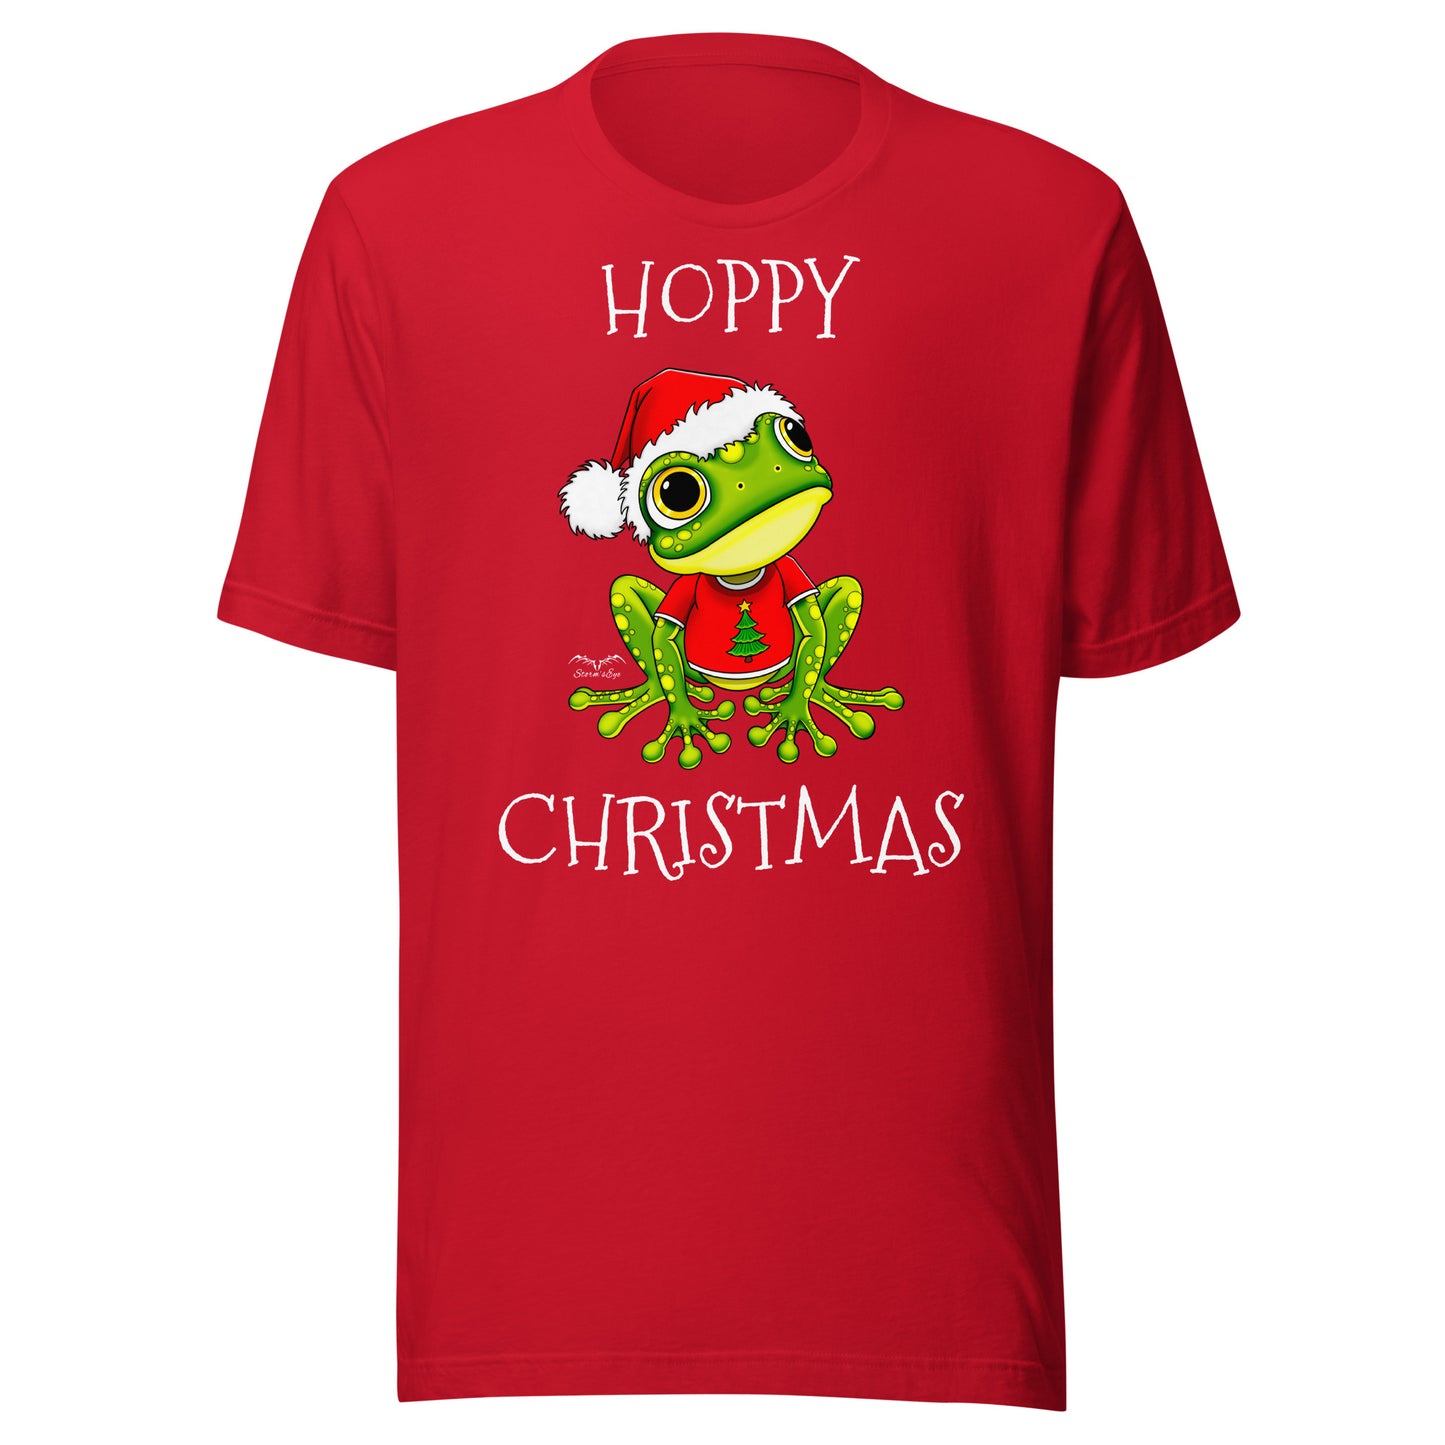 stormseye design hoppy christmas santa frog T shirt, flat view bright red